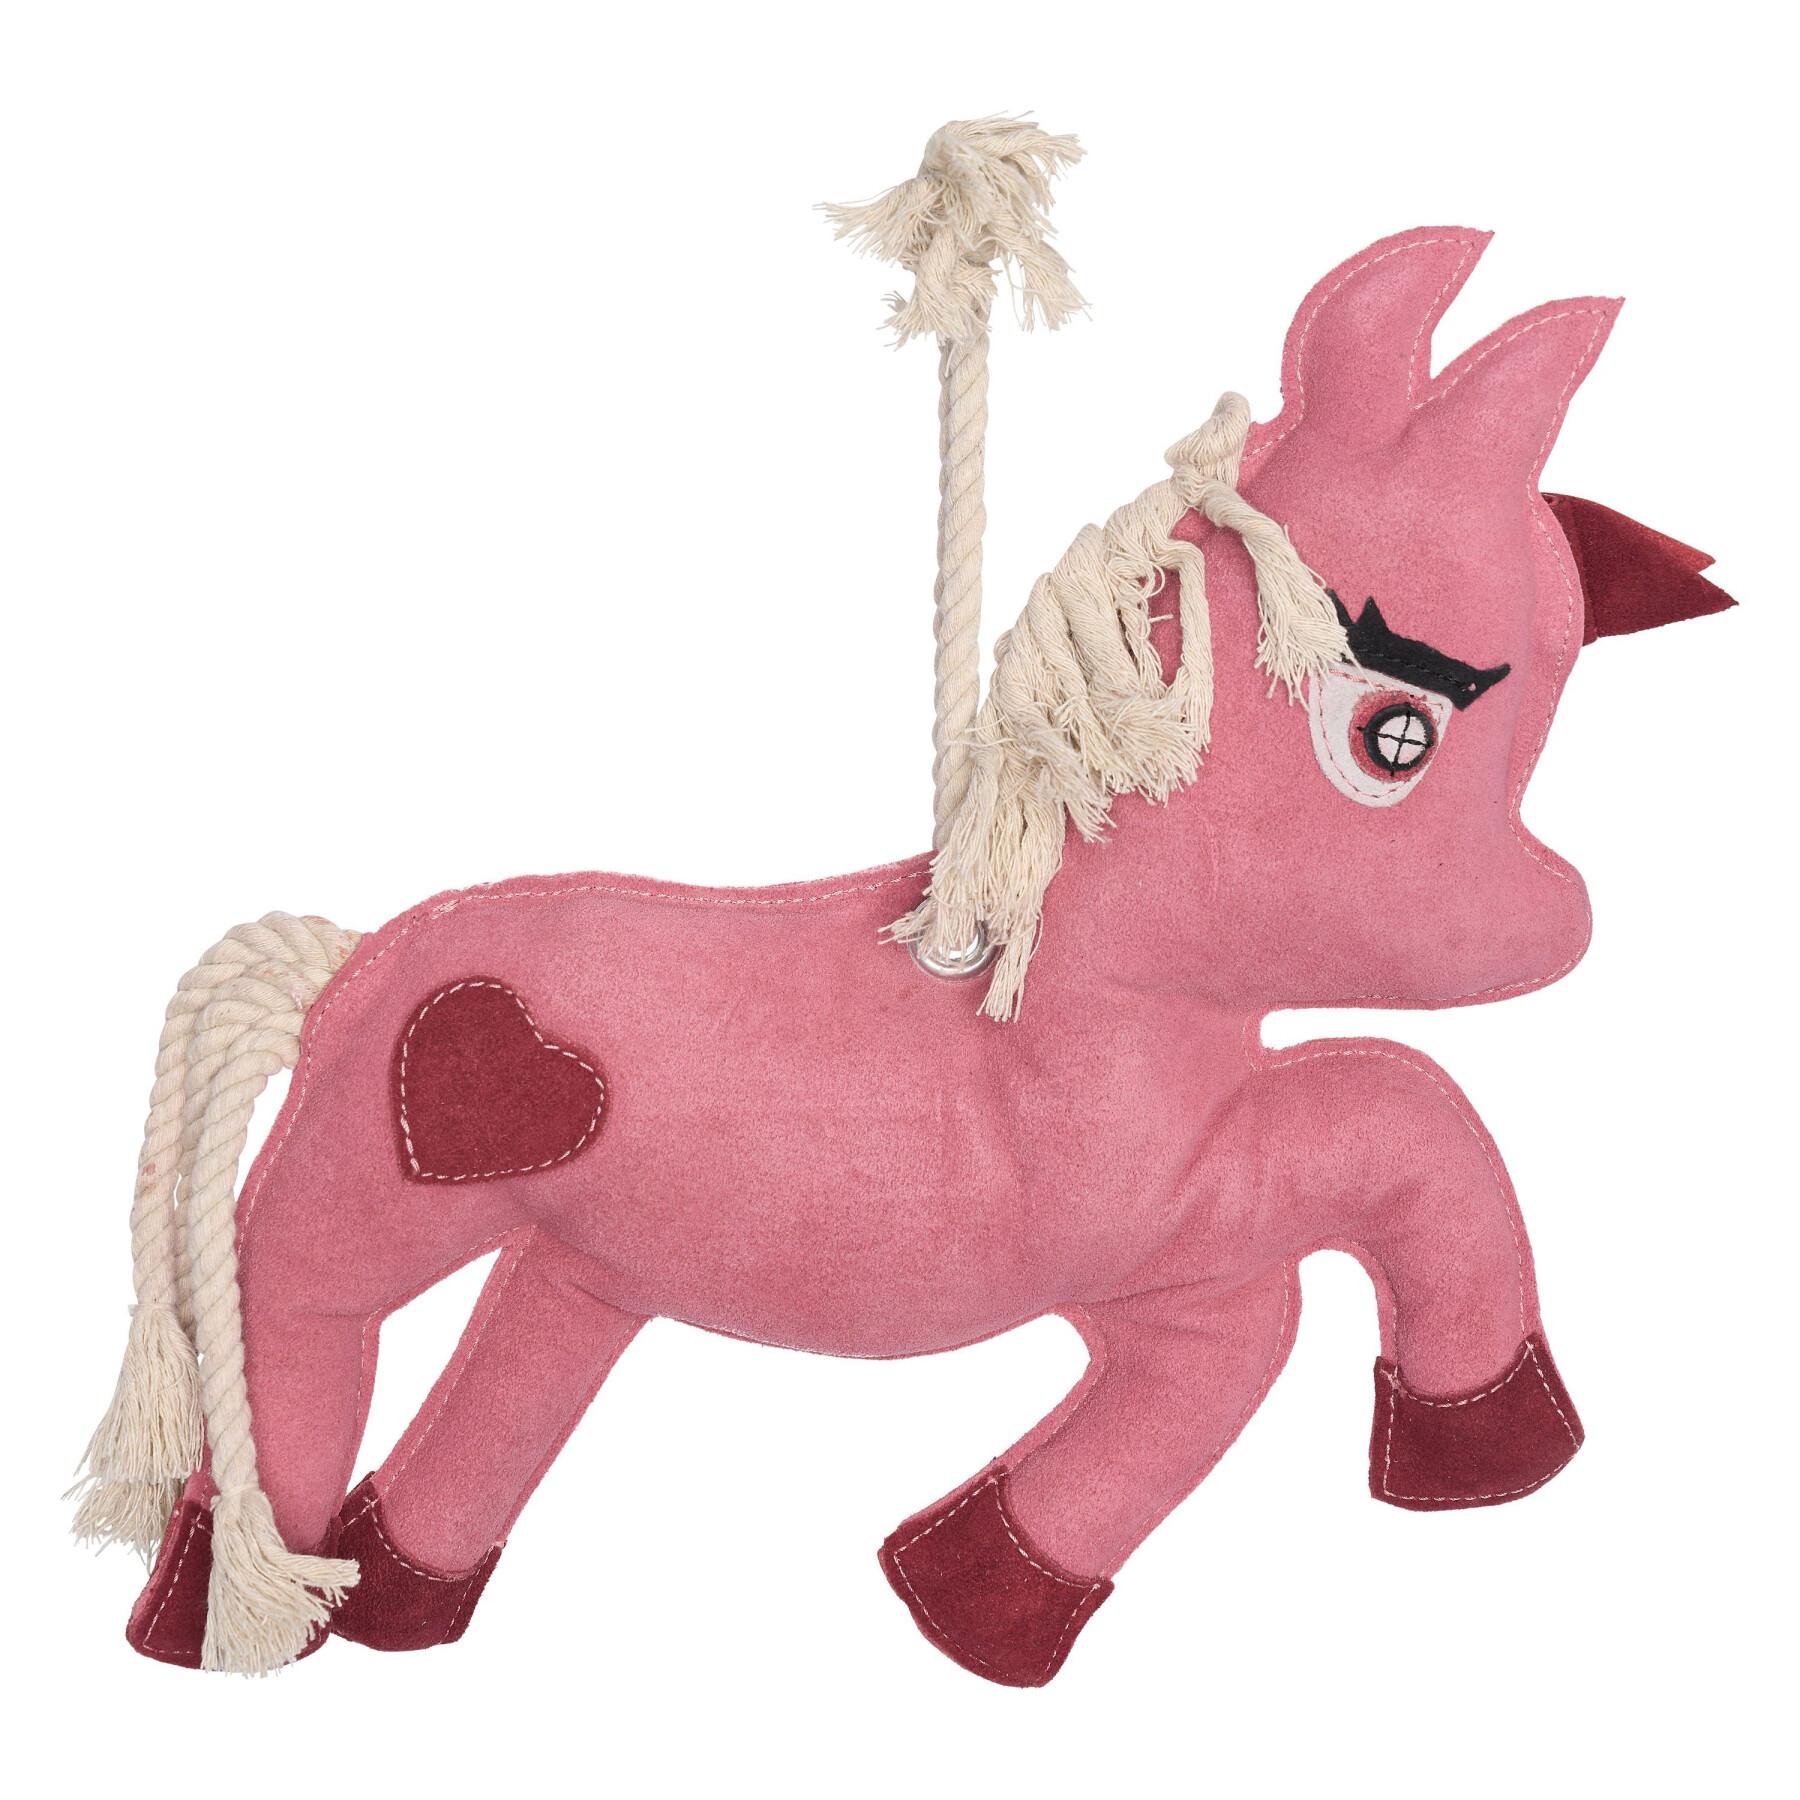 Jouet pour cheval Imperial Riding Stable buddy Licorne - Écurie